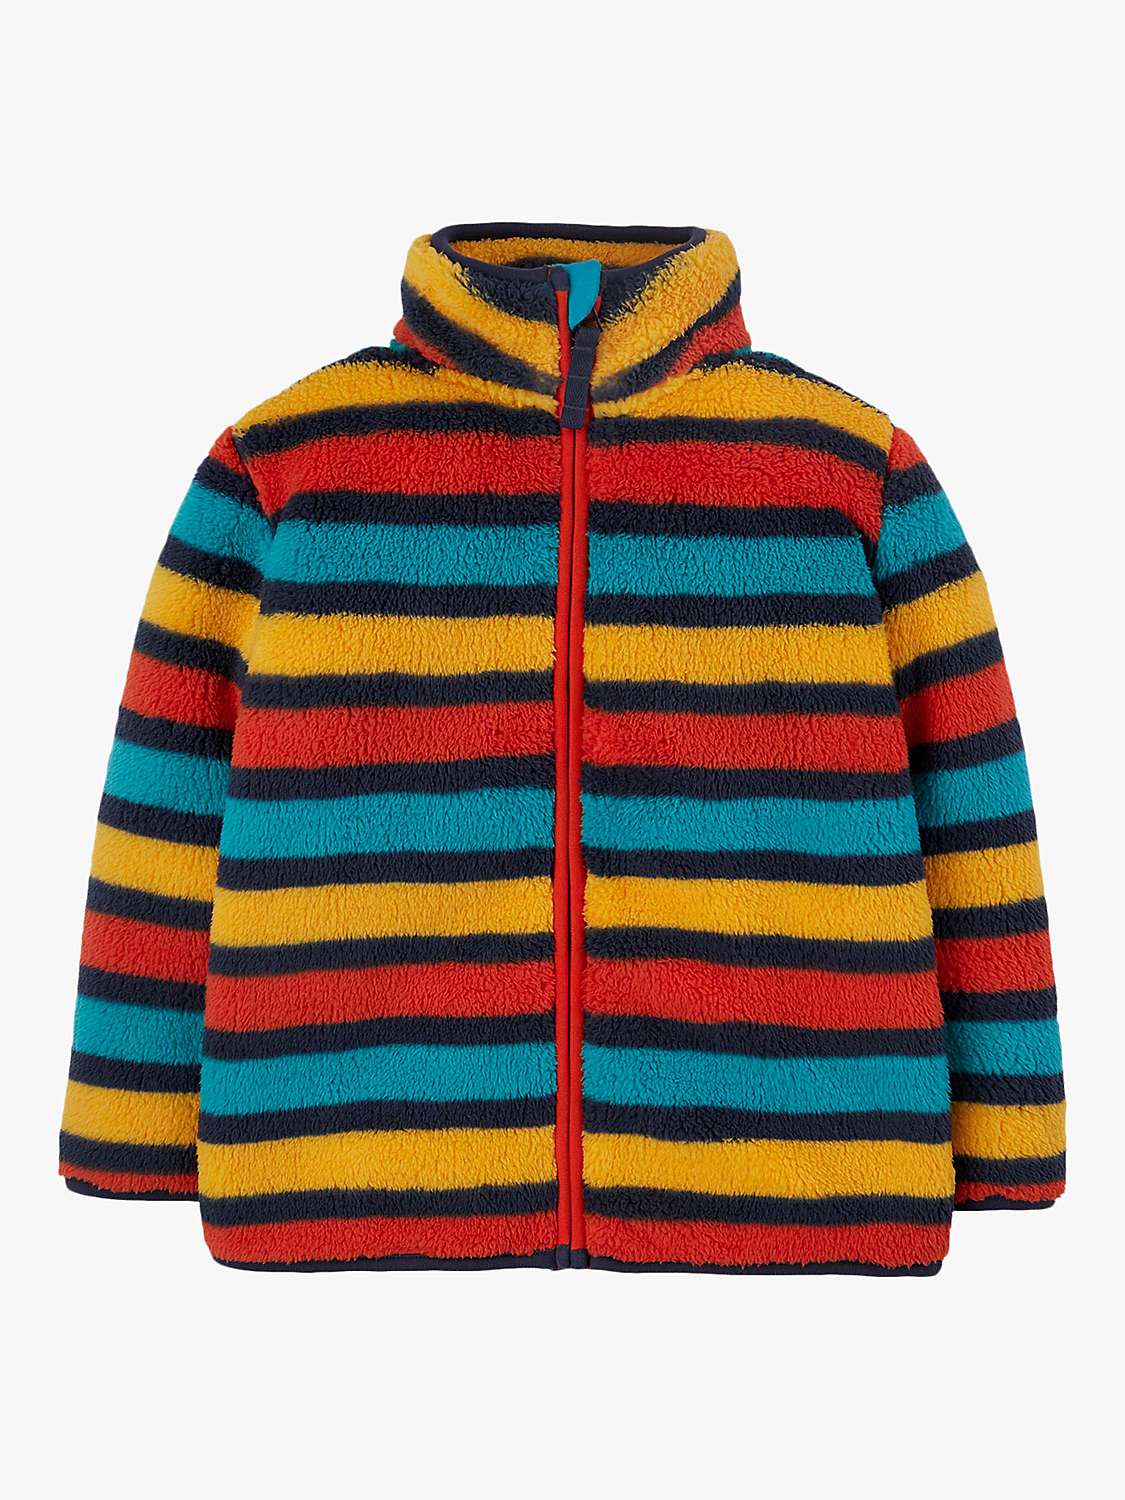 Buy Frugi Kids' Toasty Ted Camper Rainbow Stripe Fleece Jacket, Multi Online at johnlewis.com